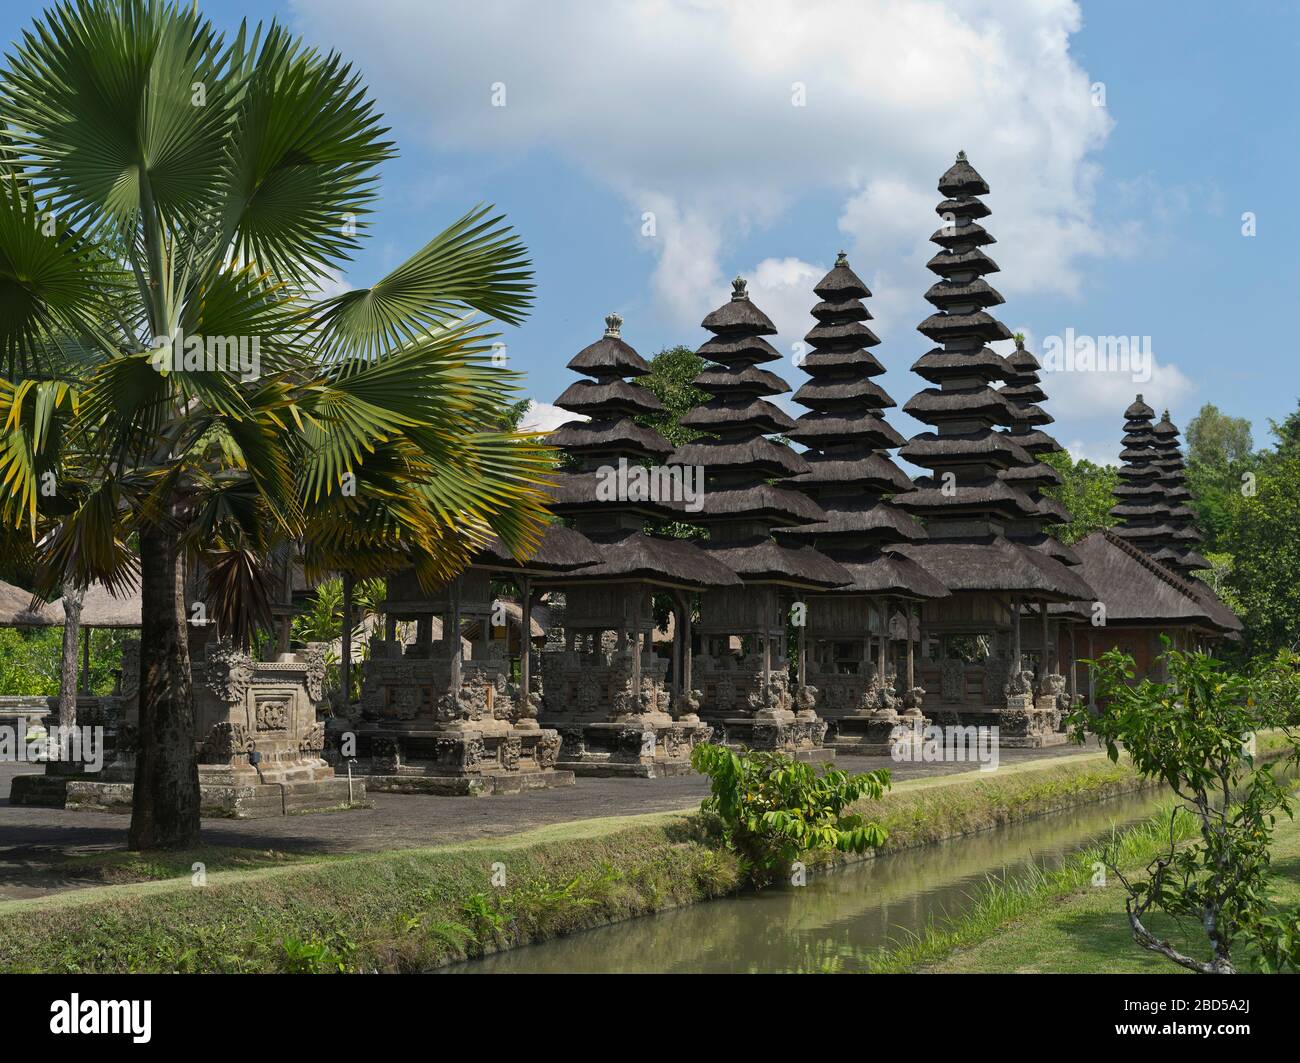 dh pura Taman Ayun Tempio reale BALI INDONESIA Balinese Hindu Mengwi templi interno sanctum pelinggih torri meru Foto Stock